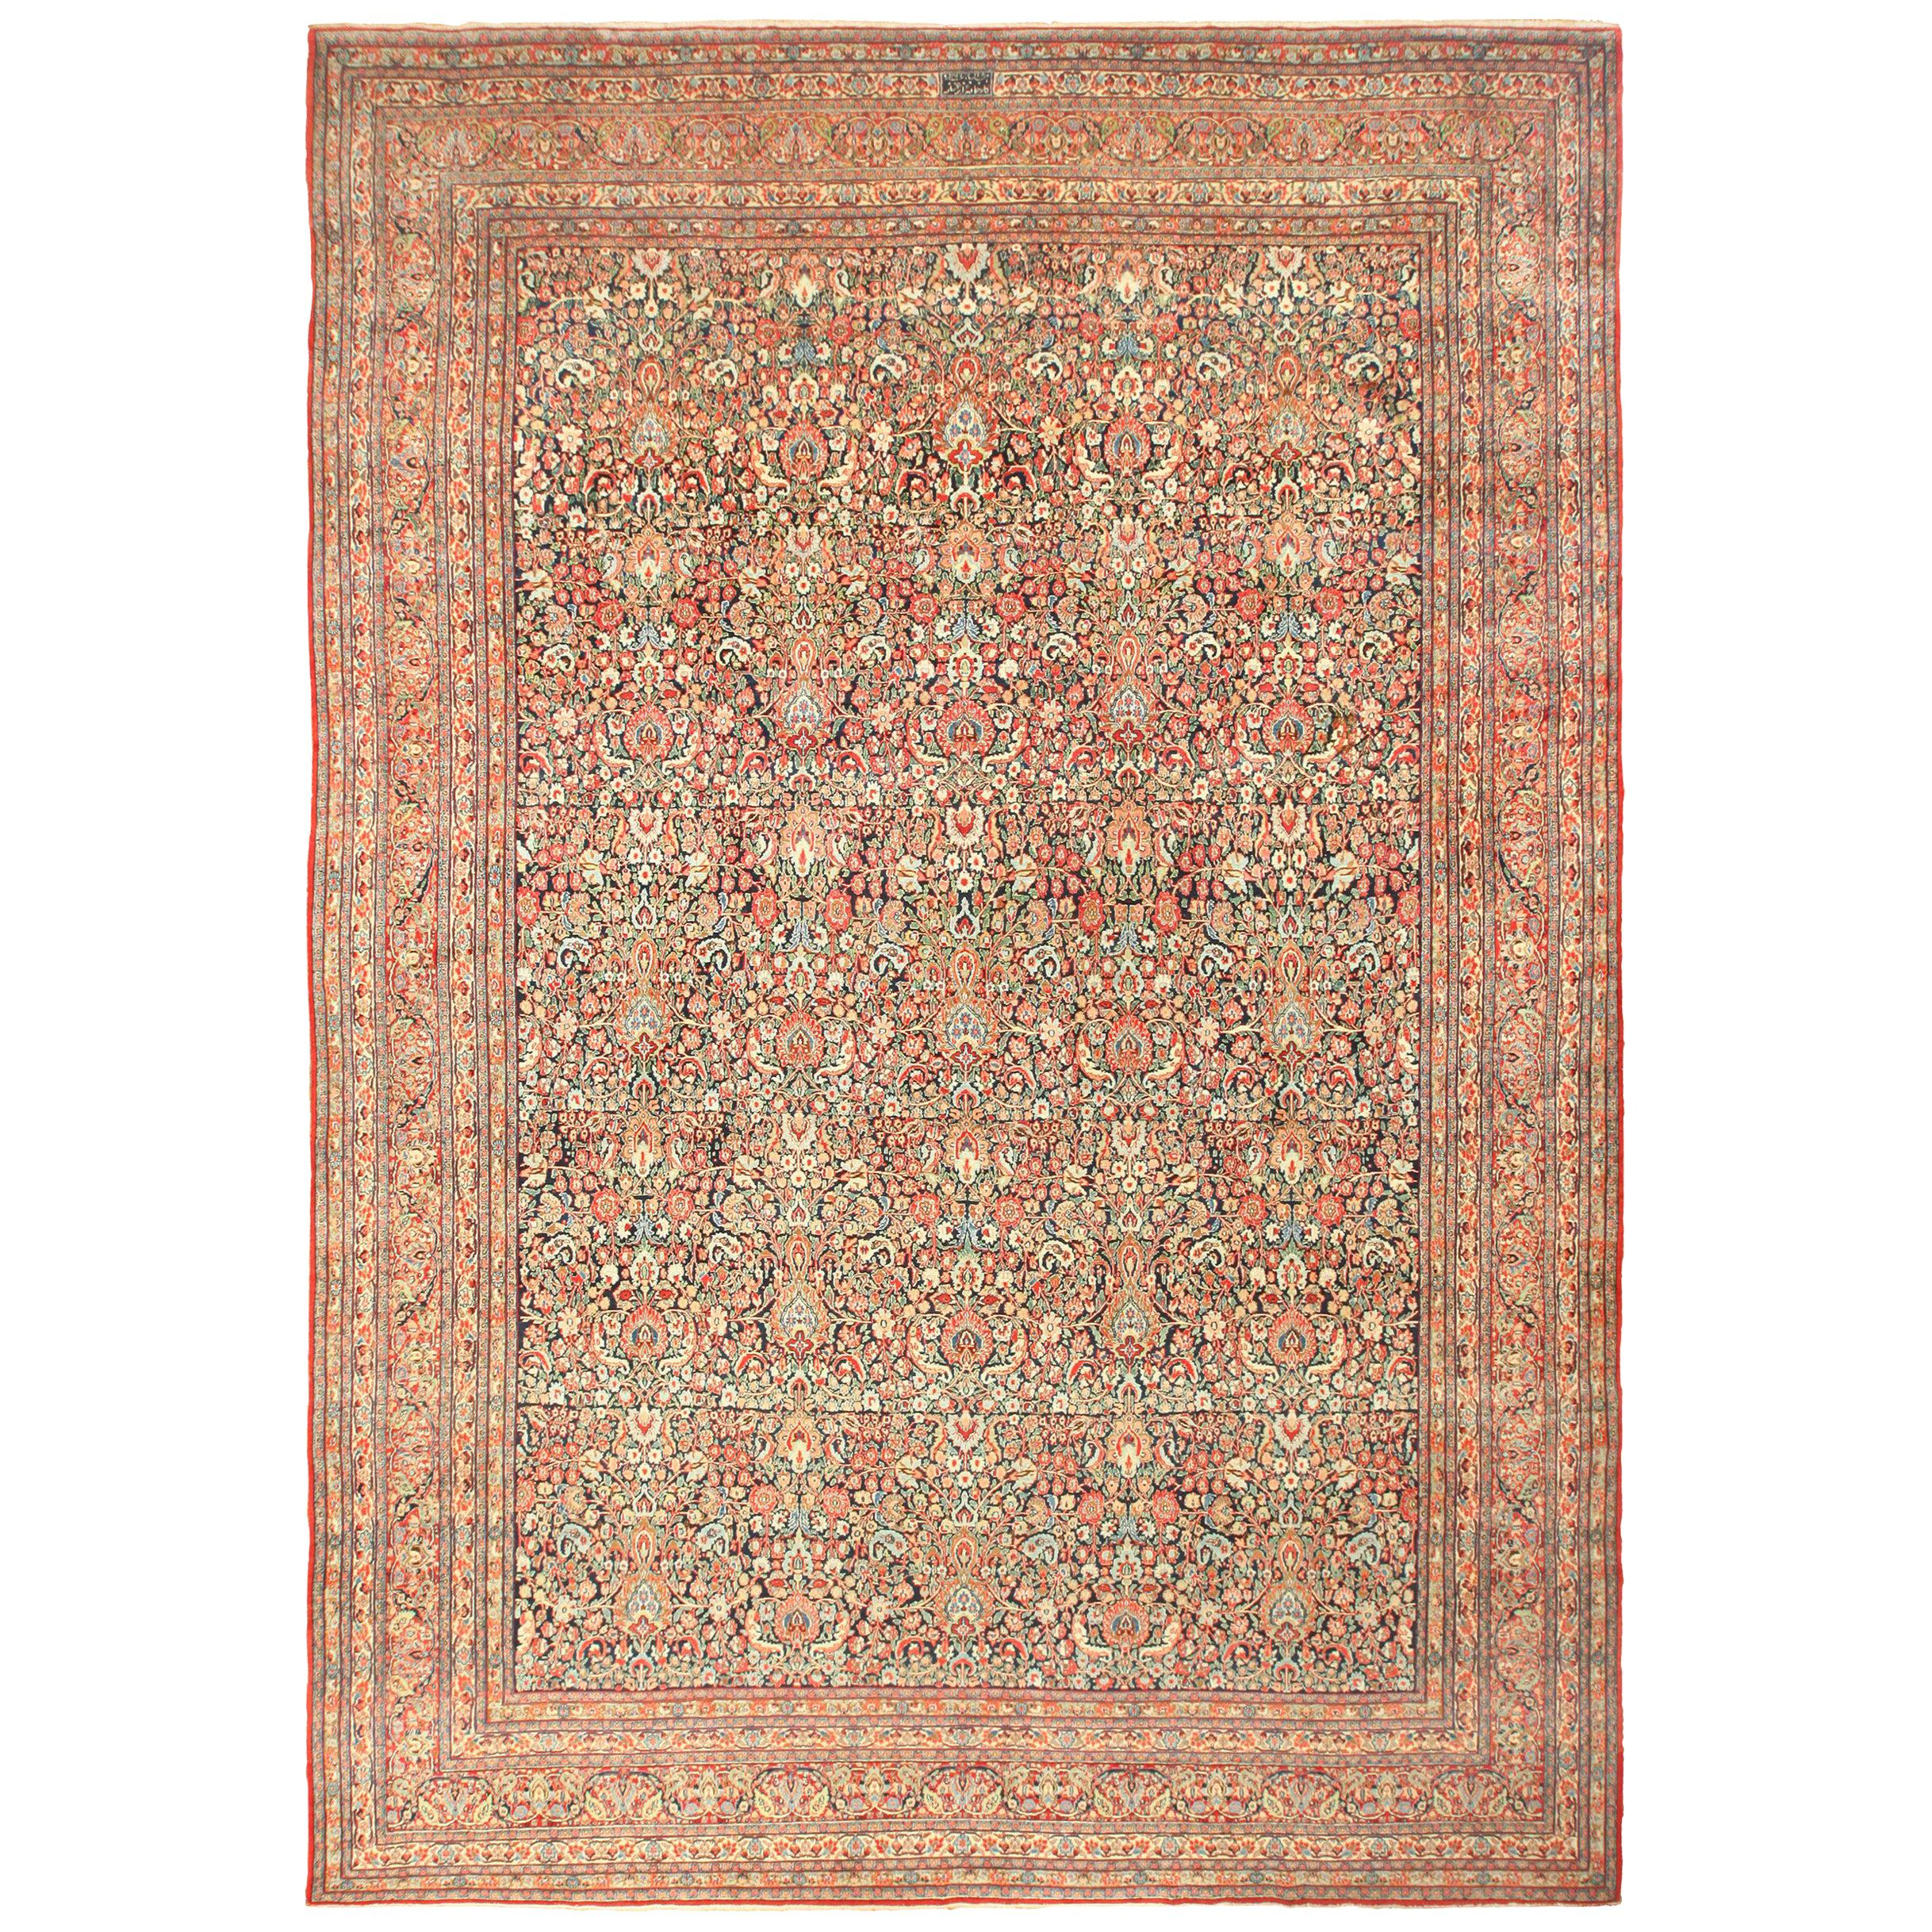 Antique Persian Khorassan Rug. Size: 13' 3" x 19' 2" 